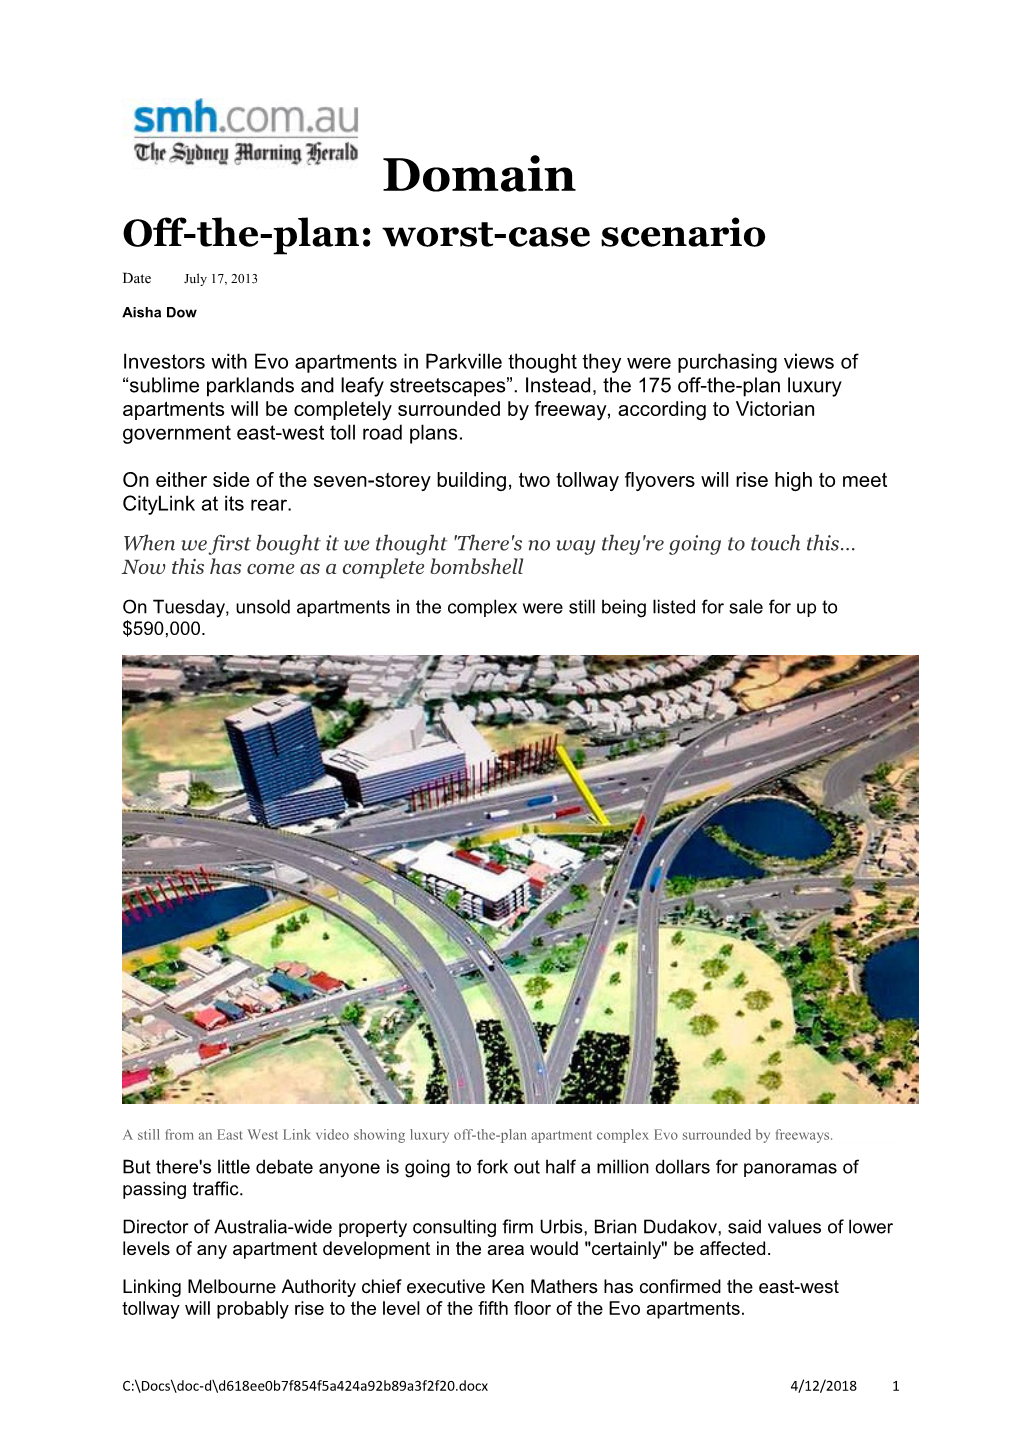 Off-The-Plan: Worst-Case Scenario